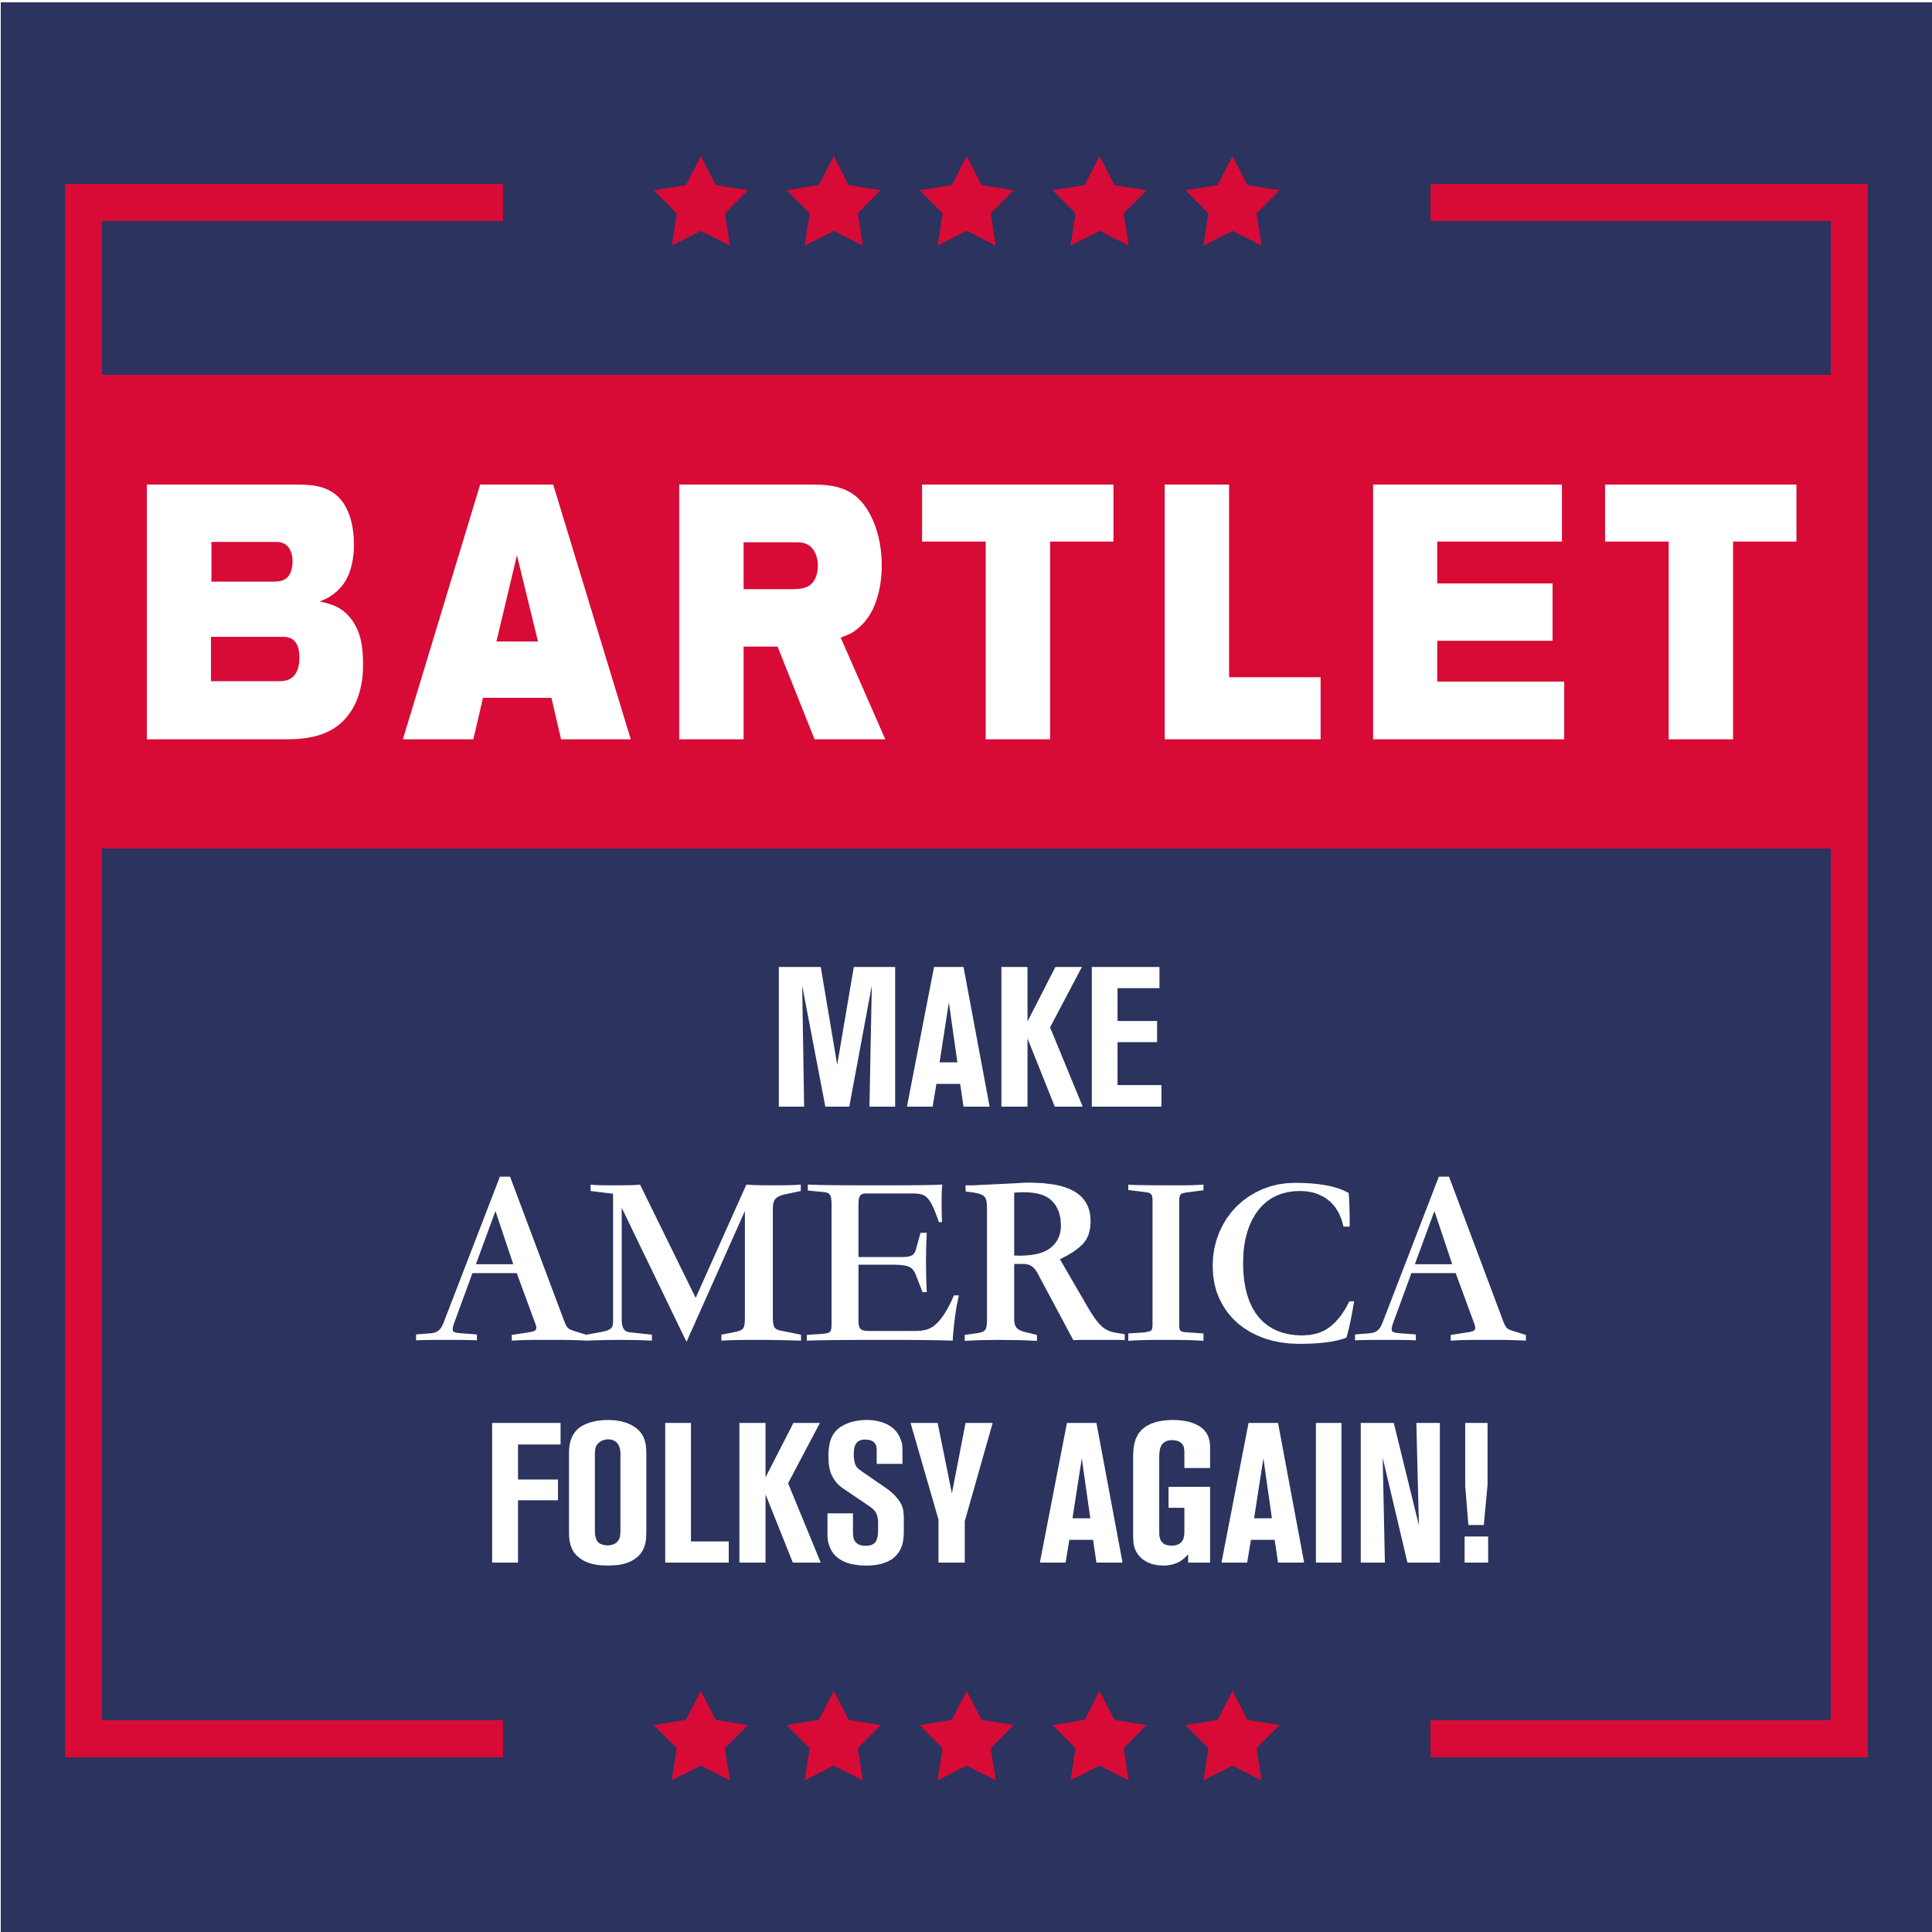 Batlet America